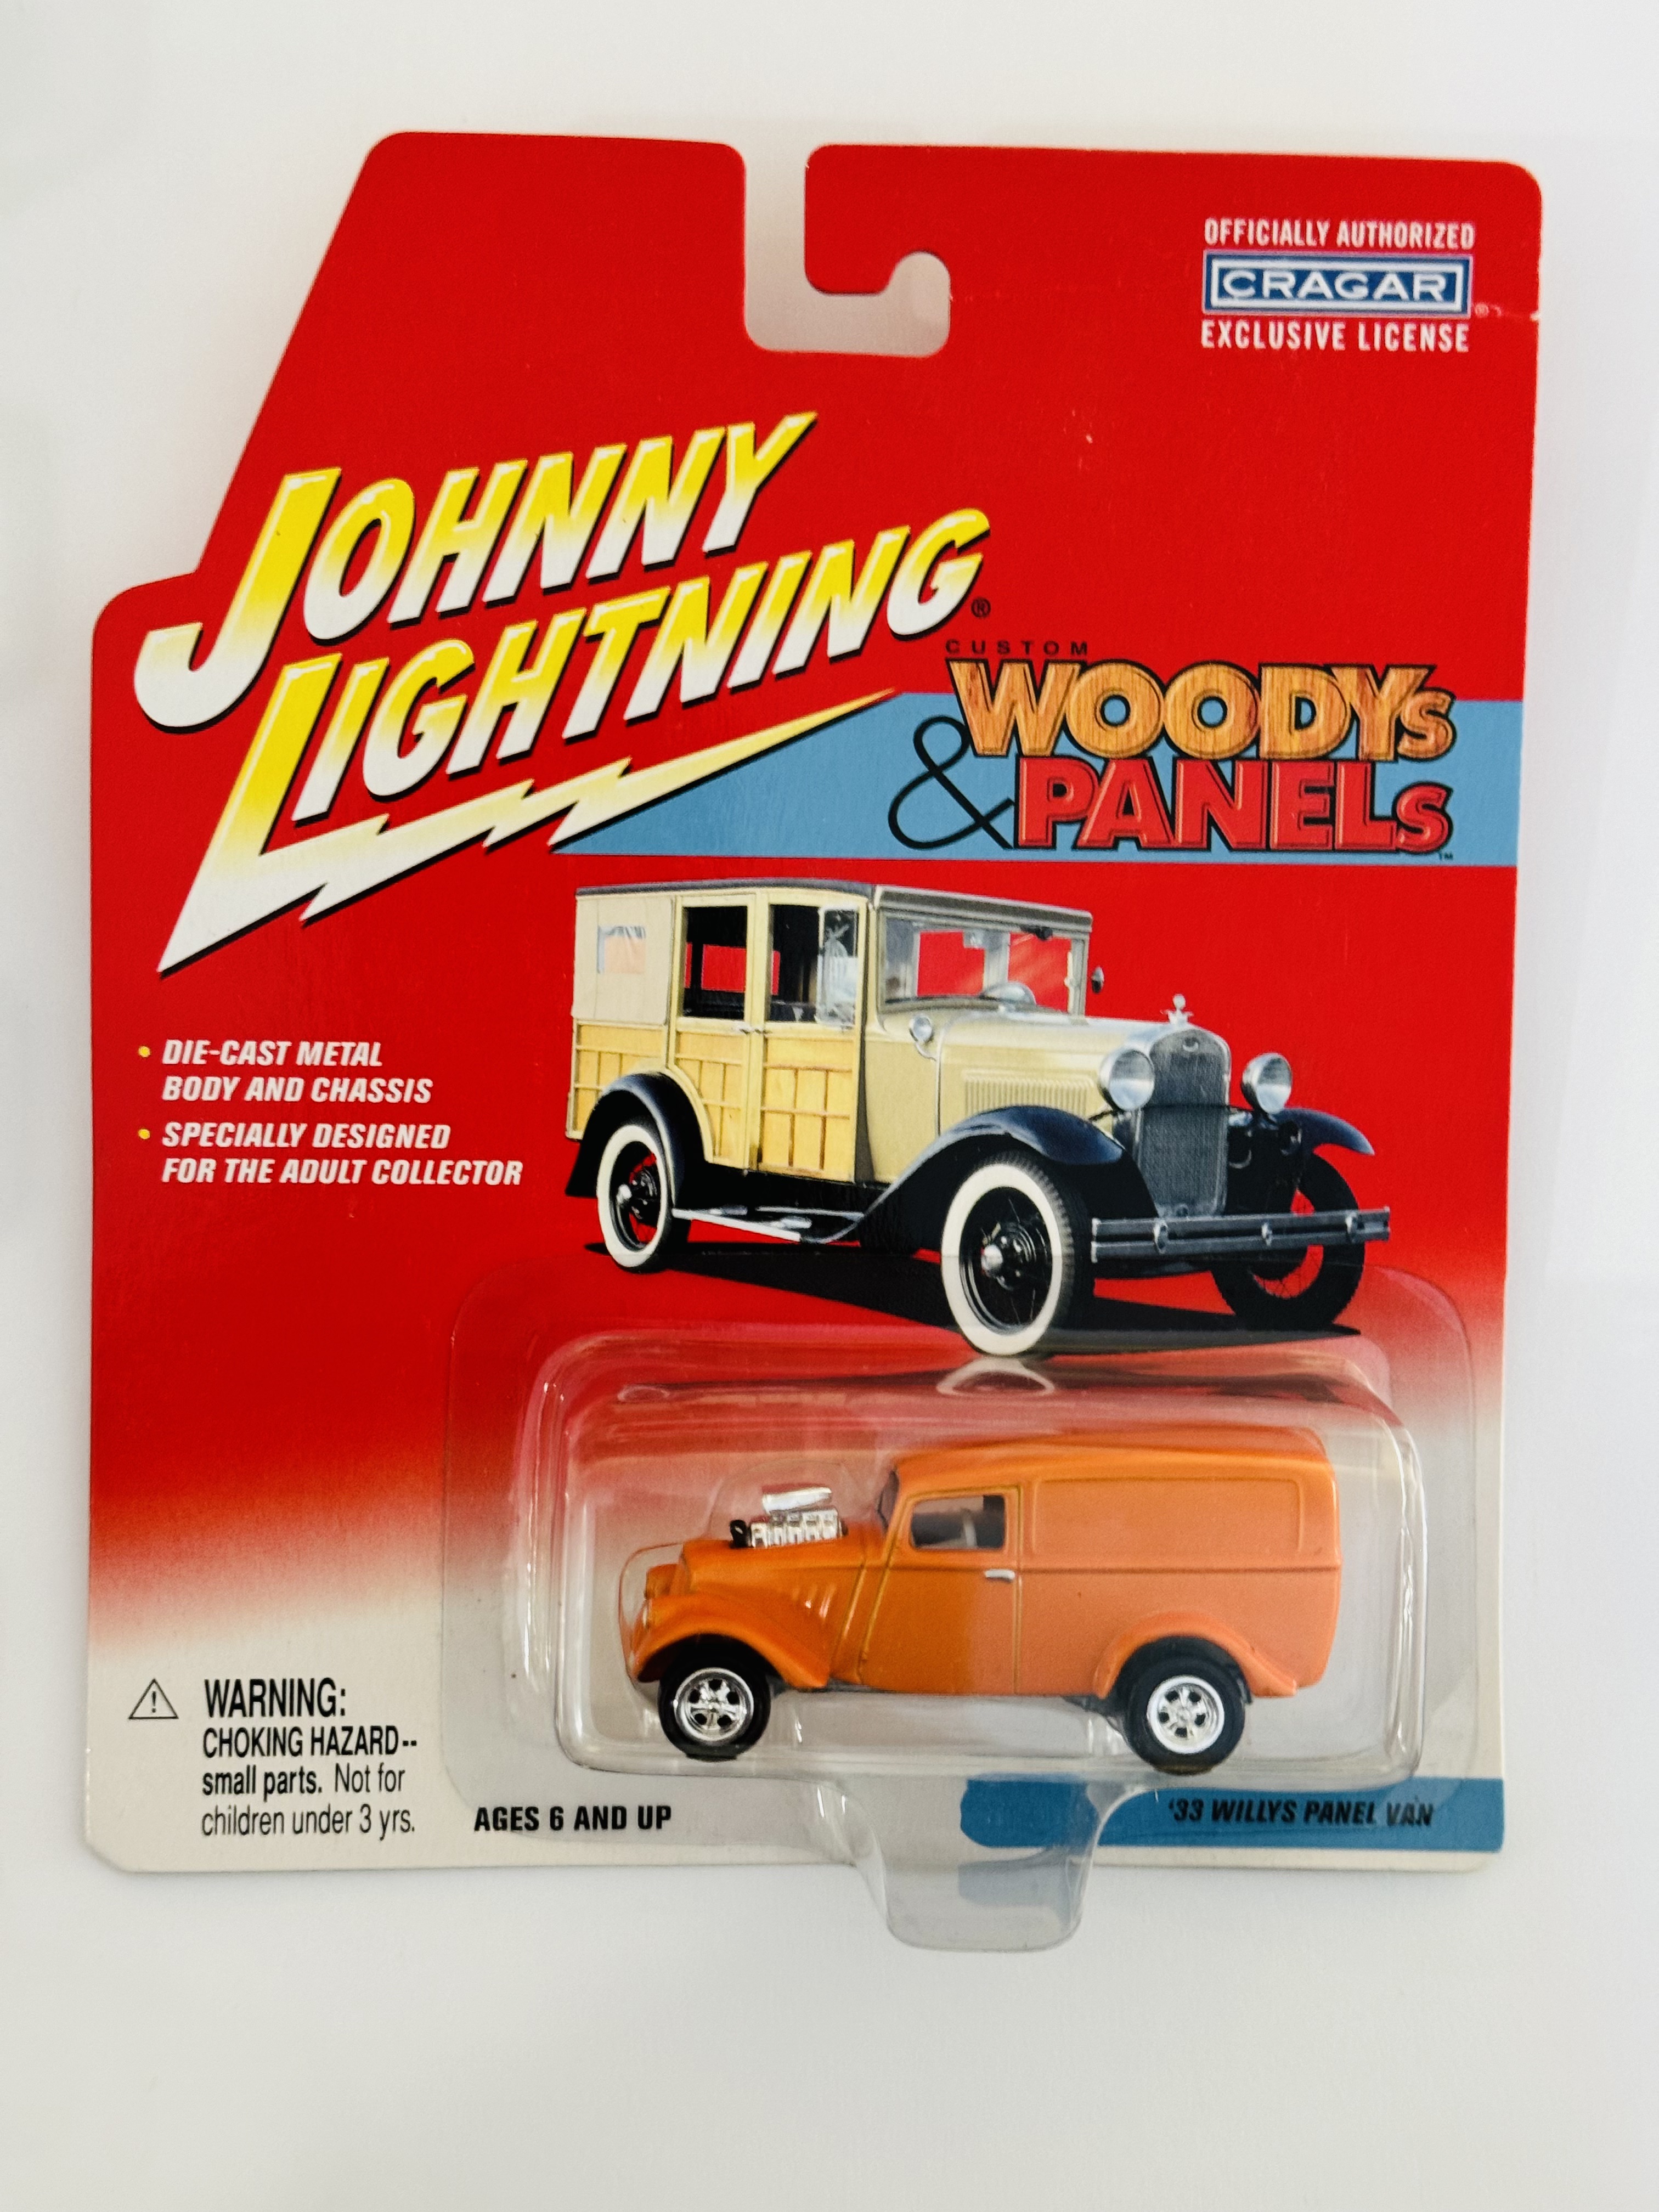 Johnny Lightning Woodys & Panels '33 Willys Panel Van